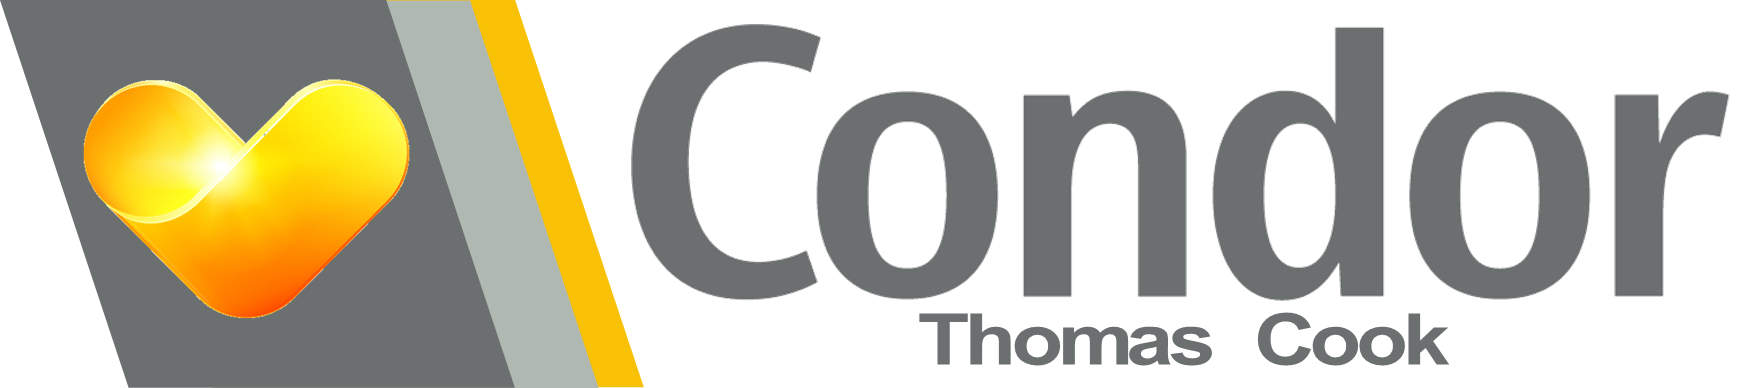 Condor - Thomas Cook
Keywords: Condor - Thomas Cook